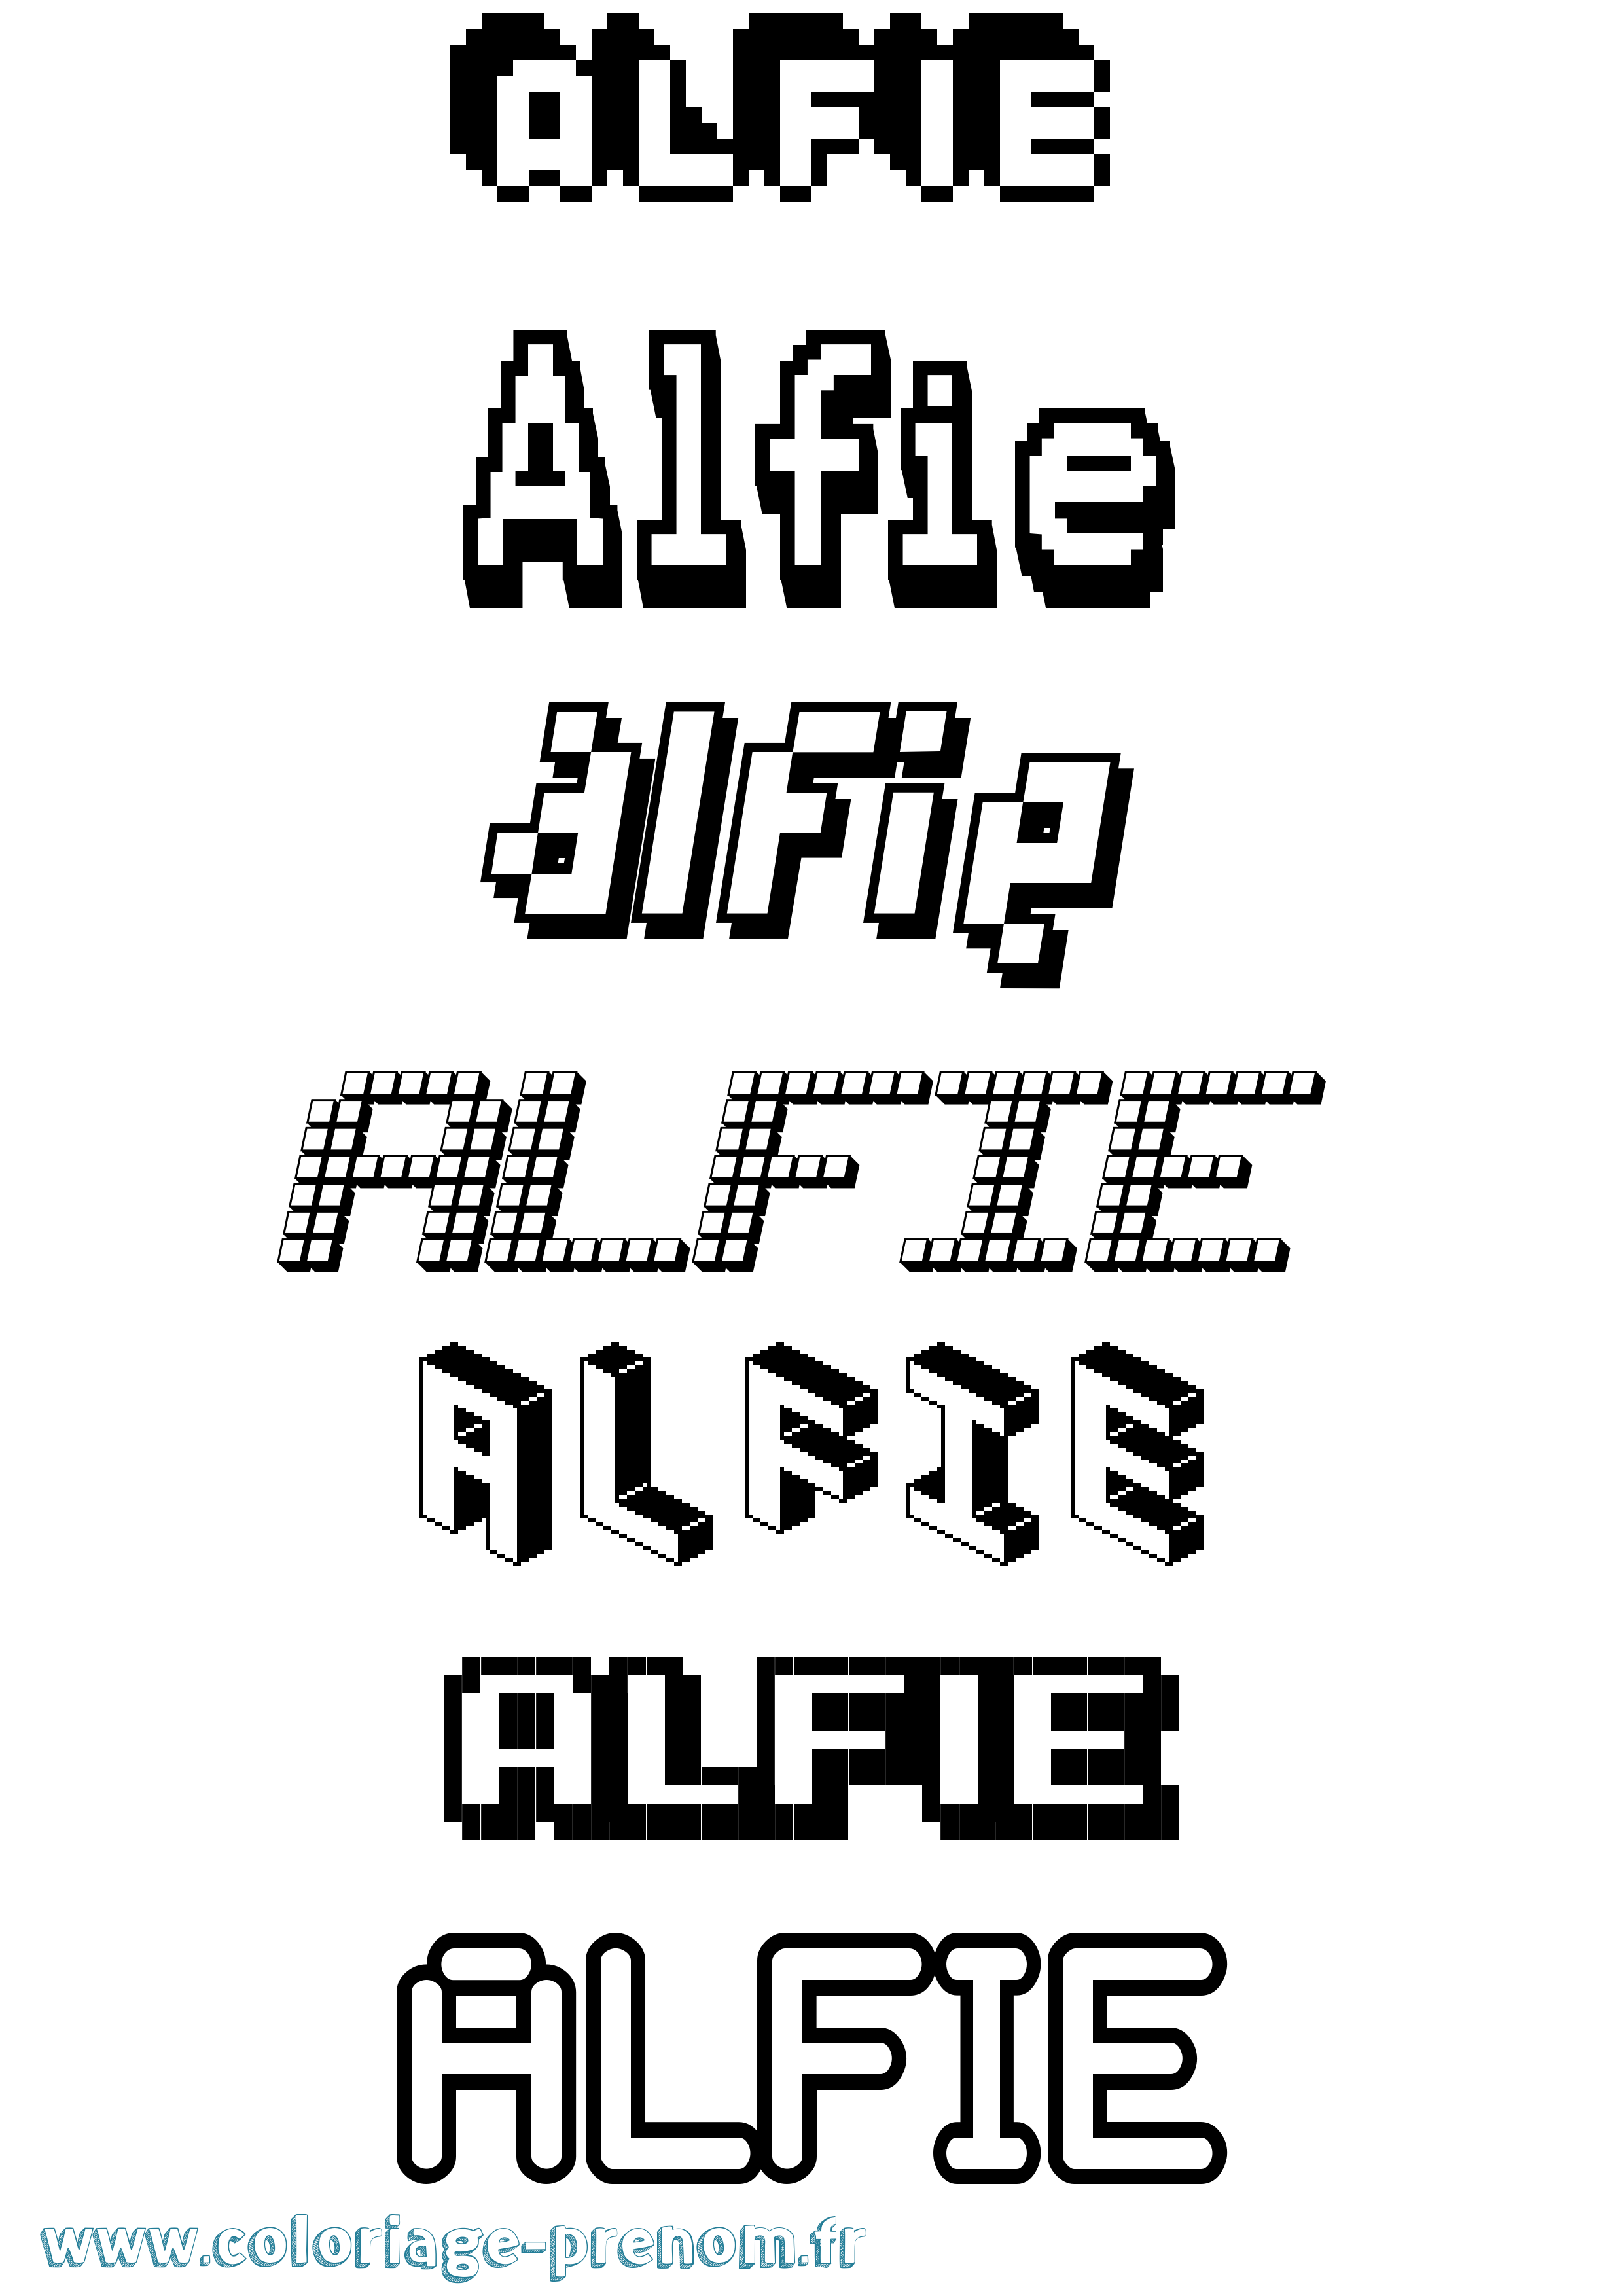 Coloriage prénom Alfie Pixel